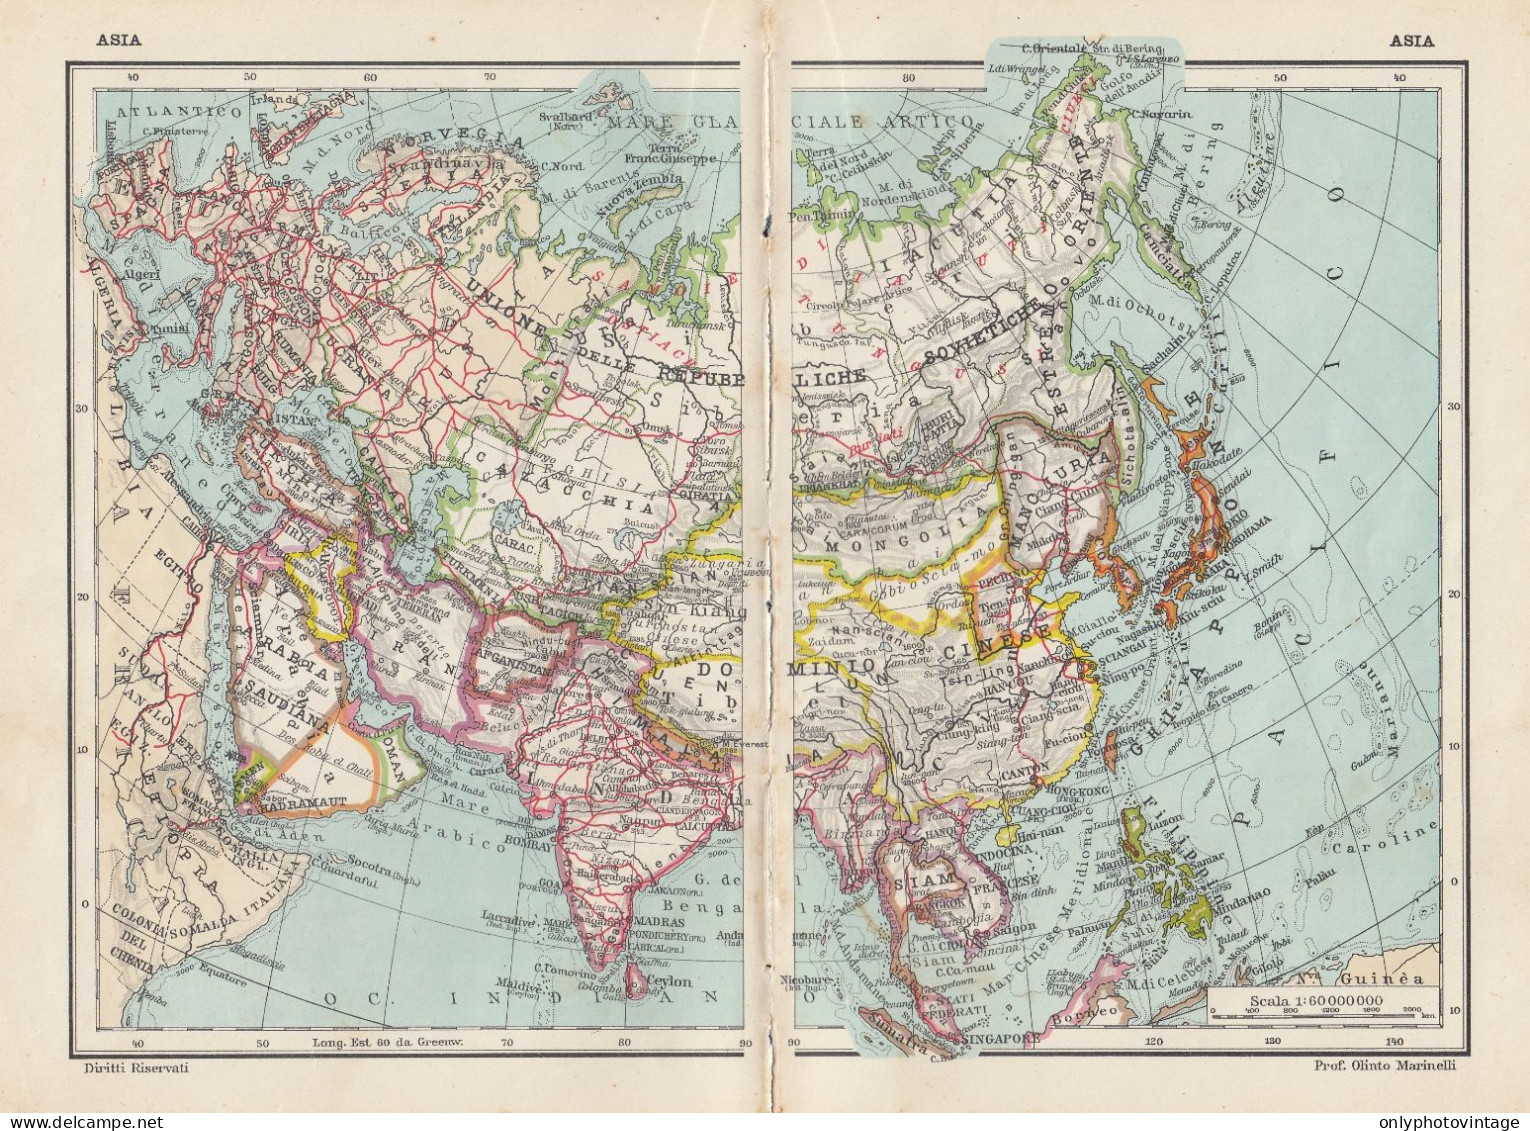 Asia - Carta Geografica D'epoca - 1936 Vintage Map - Landkarten